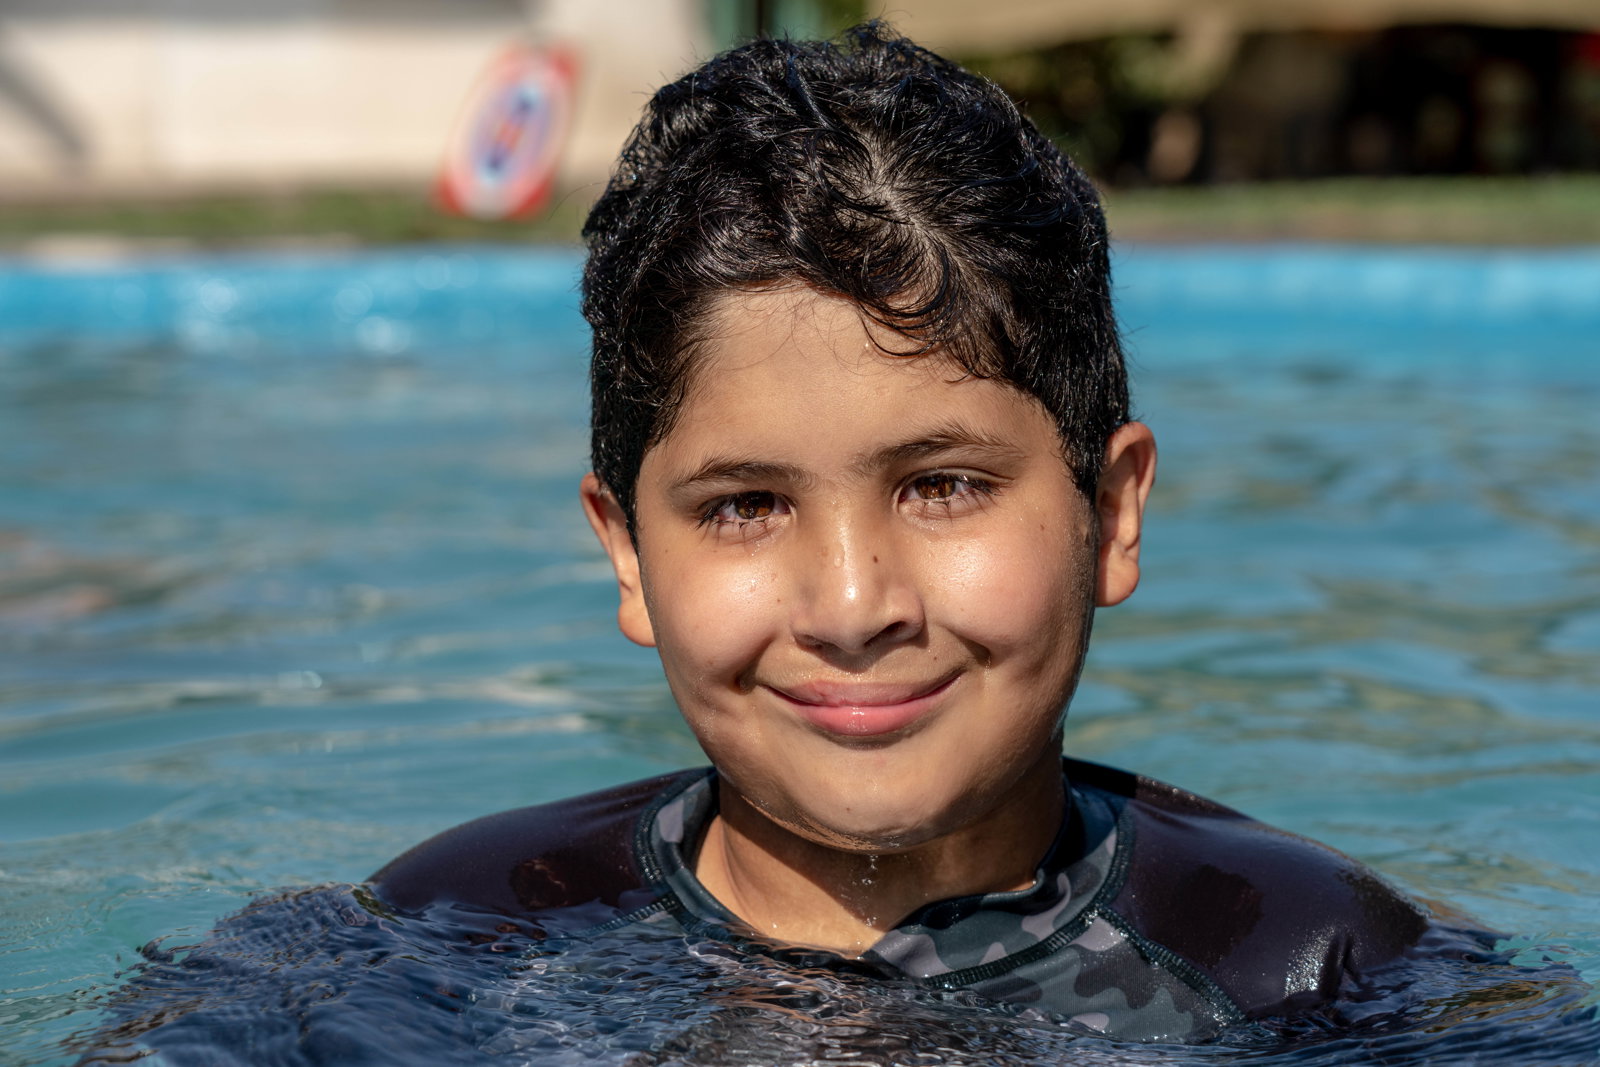 closeup of juan smiling as he wades in an outdoor pool.